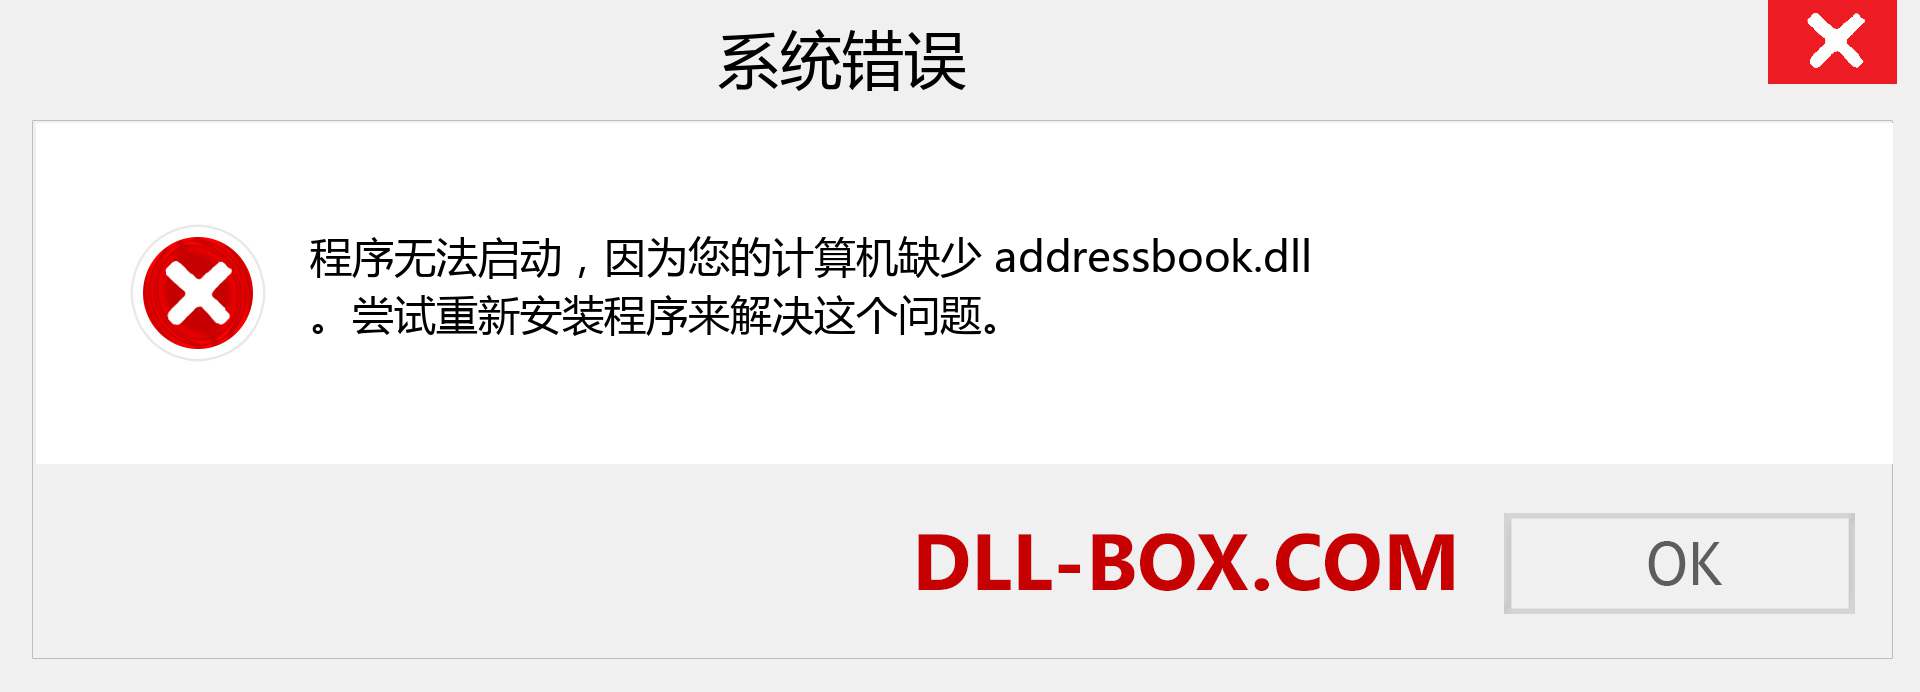 addressbook.dll 文件丢失？。 适用于 Windows 7、8、10 的下载 - 修复 Windows、照片、图像上的 addressbook dll 丢失错误